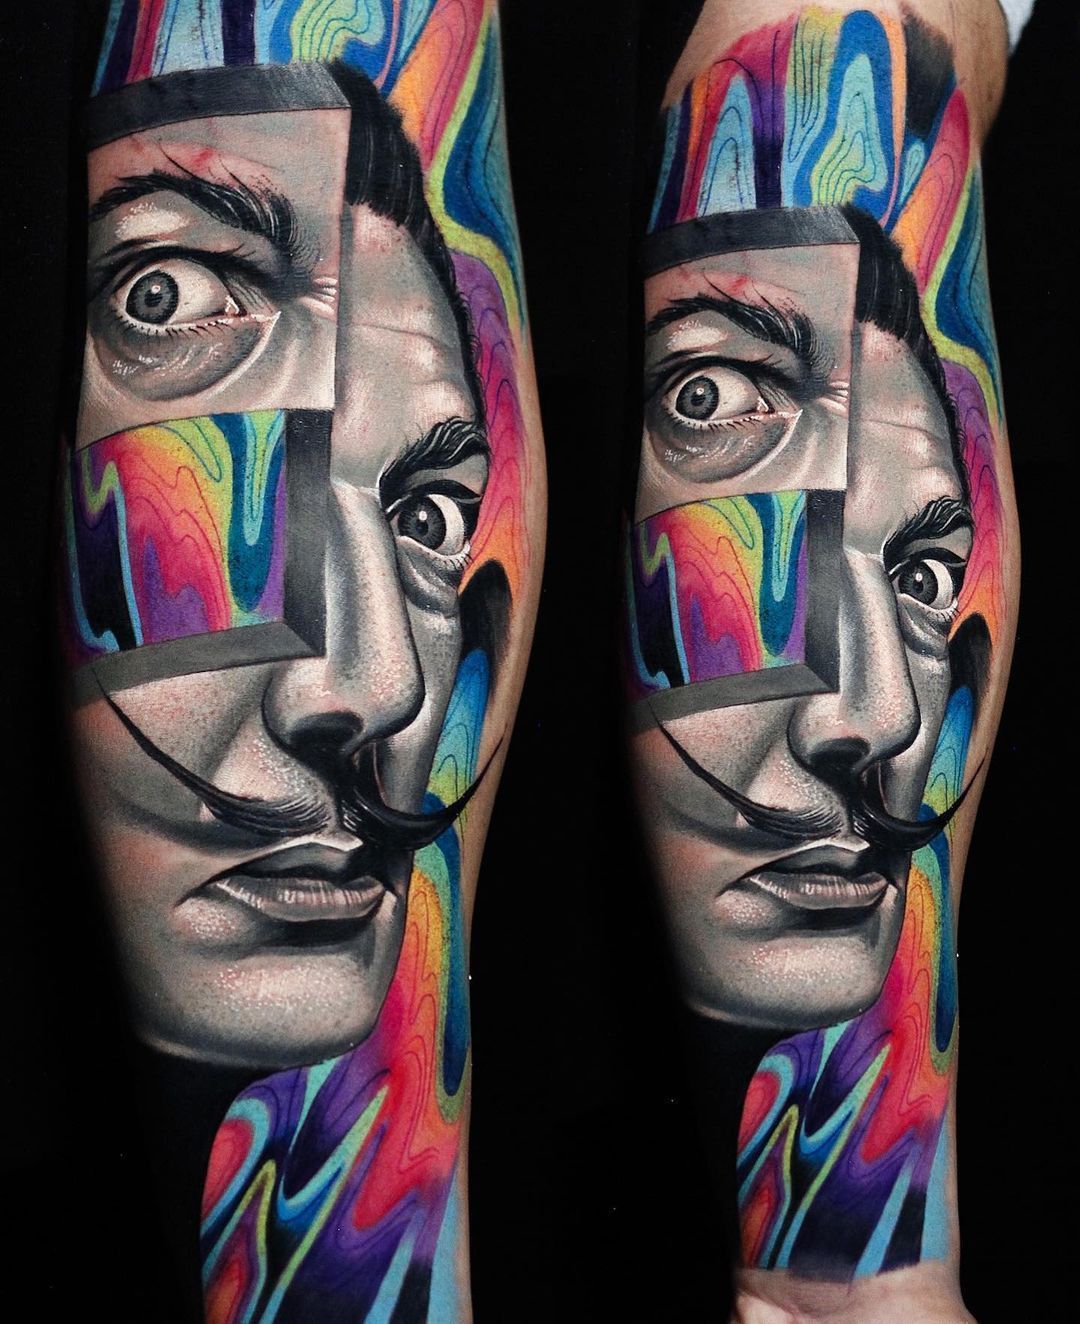 Bright and crazy surreal tattoos by Leonardo_tattoos | iNKPPL